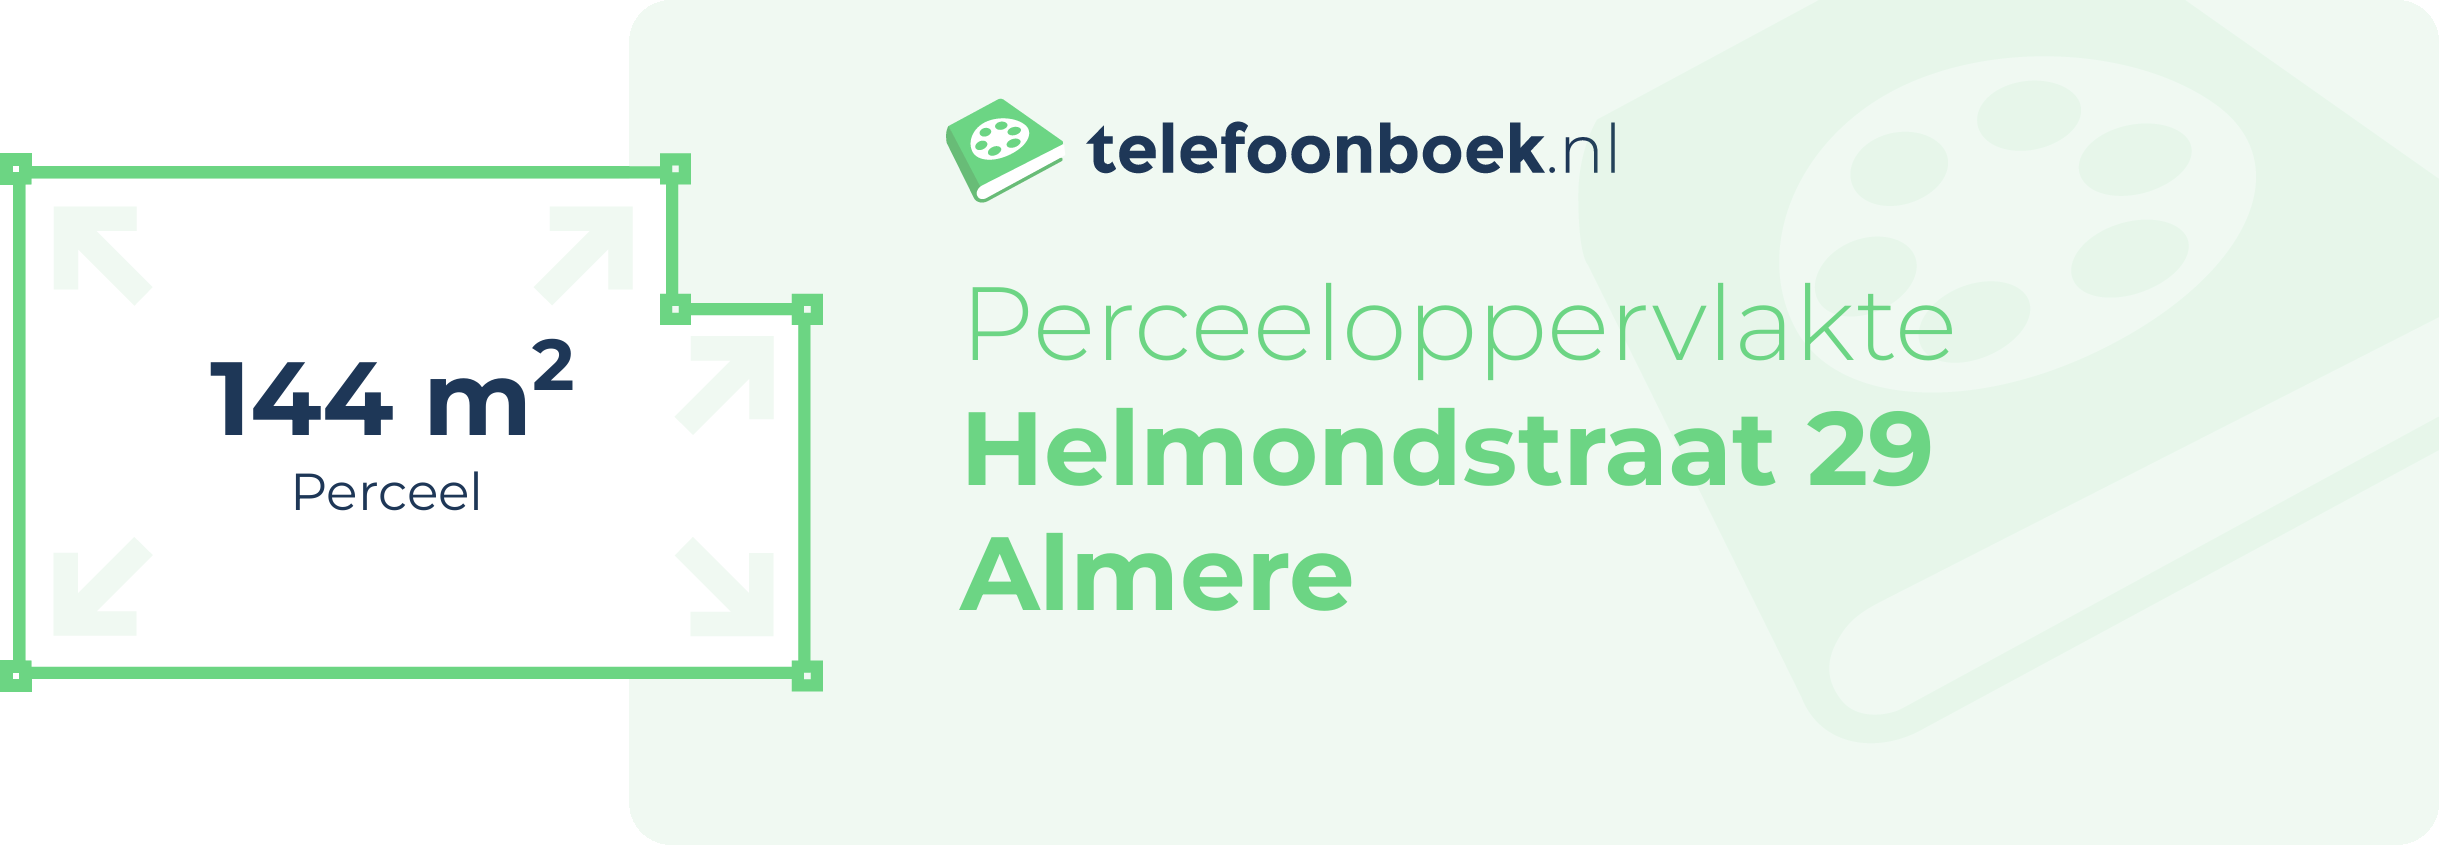 Perceeloppervlakte Helmondstraat 29 Almere